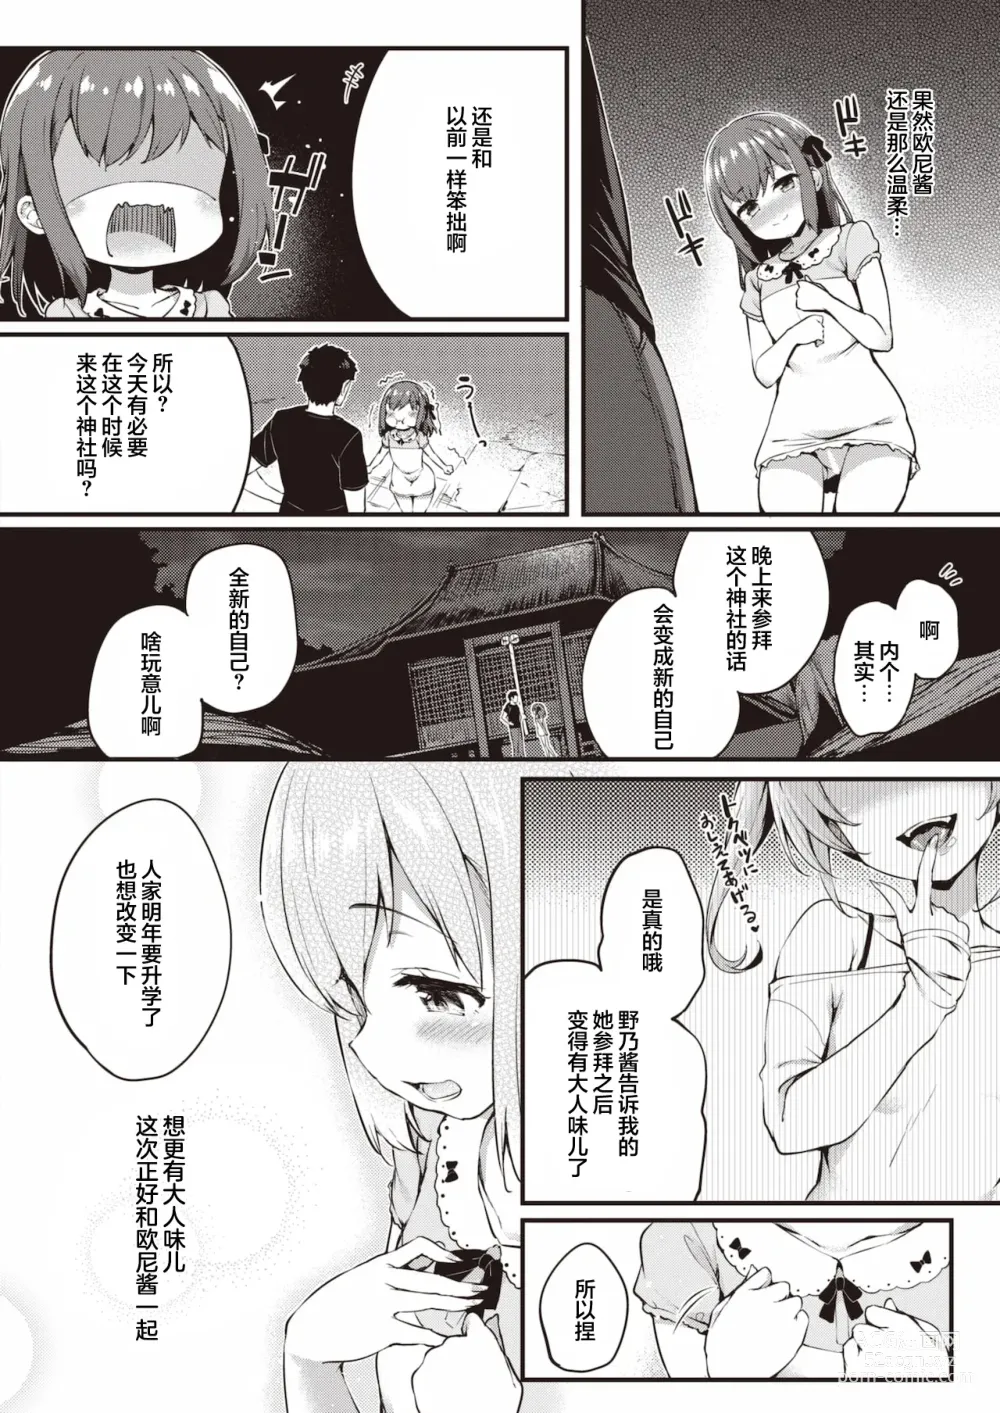 Page 2 of manga 崭新的我